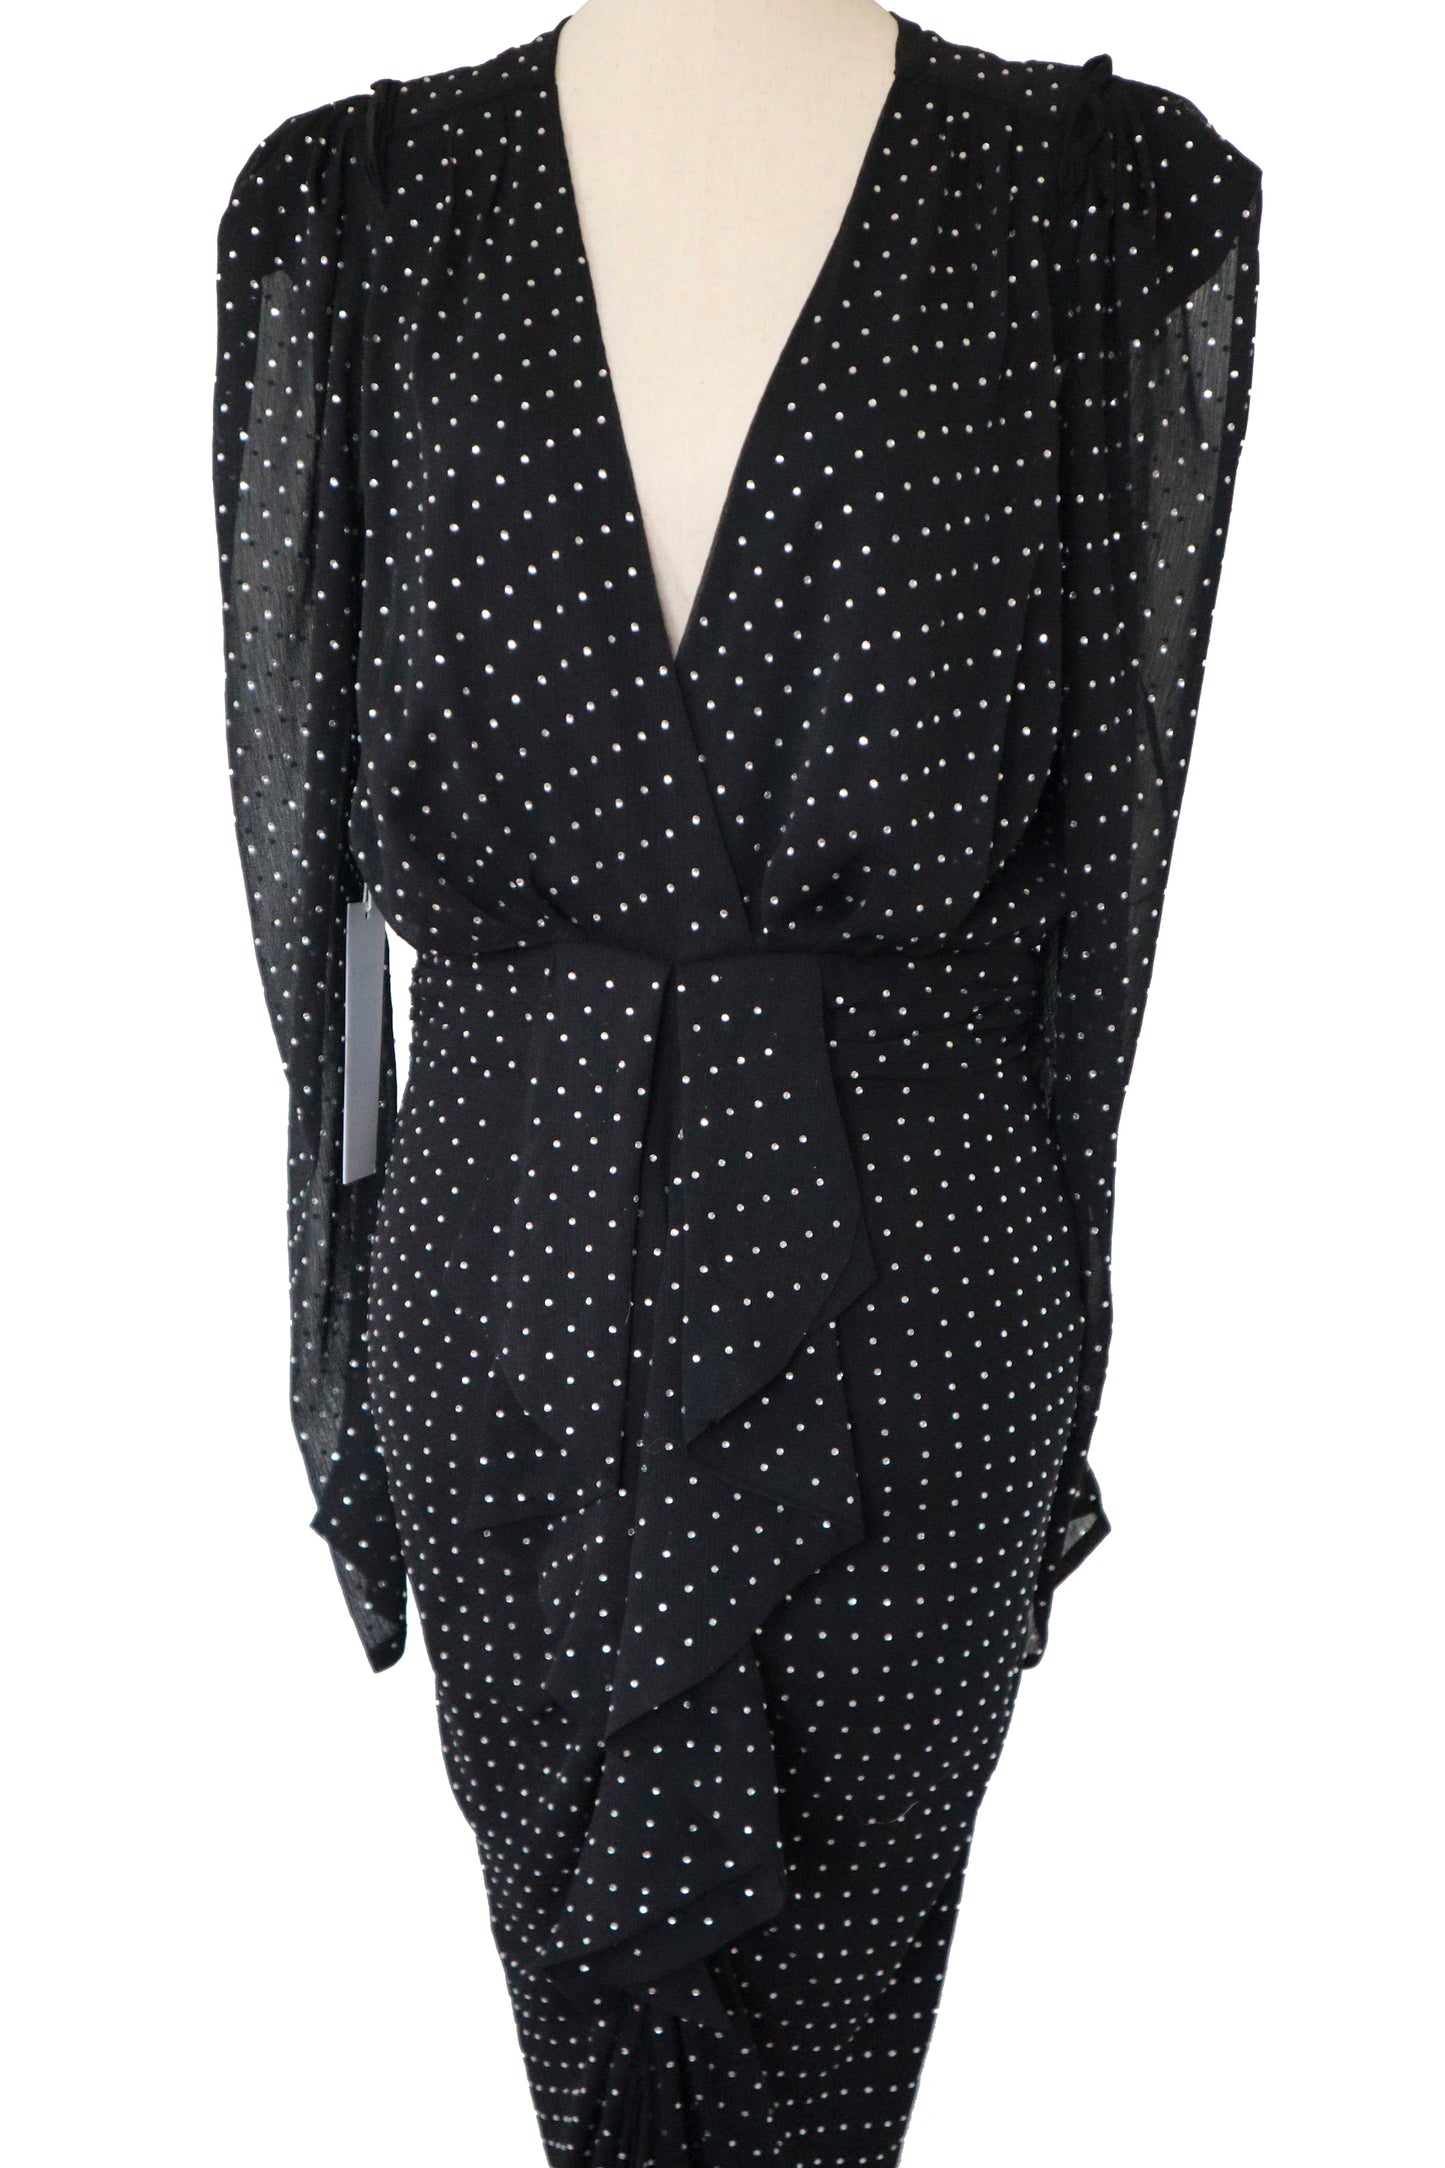 RONNY KOBO - Black Long Sleeve Dress W/ TAGS - Size M